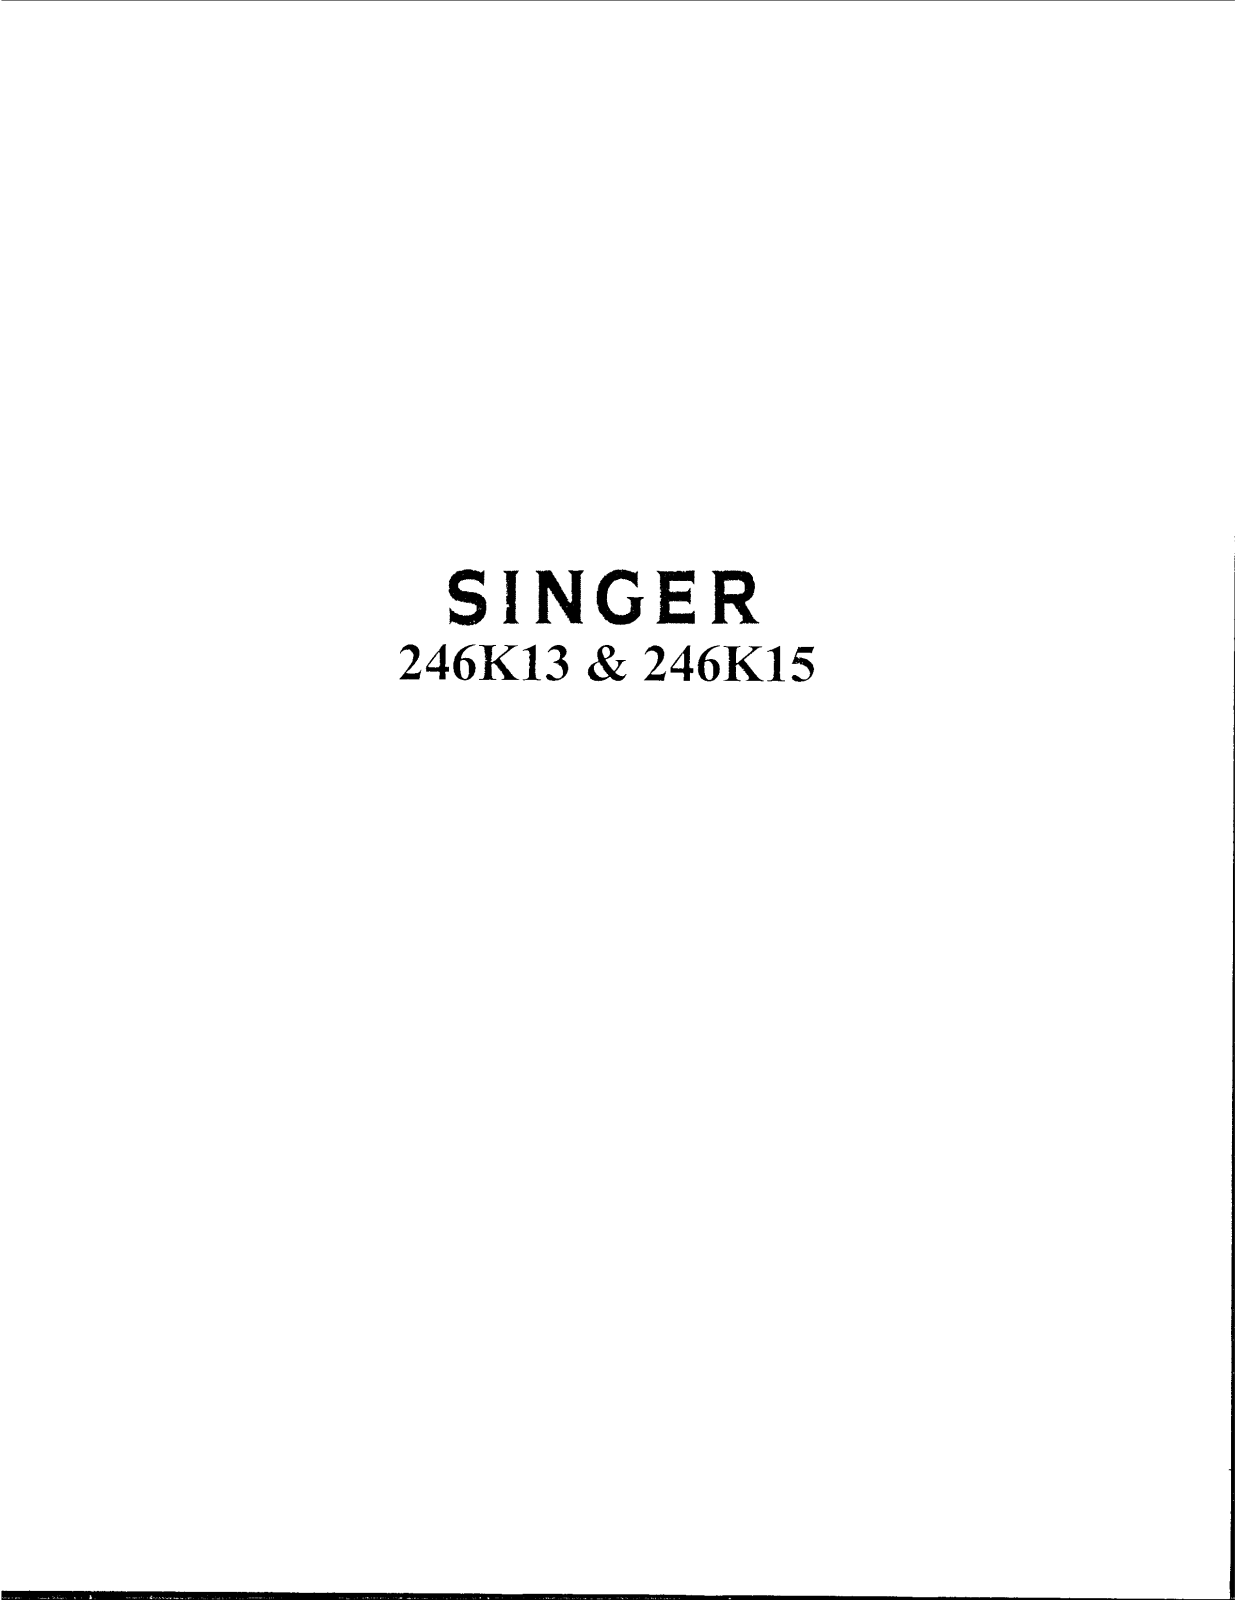 Singer 246K13, 246K15, 246K14 Instruction Manual